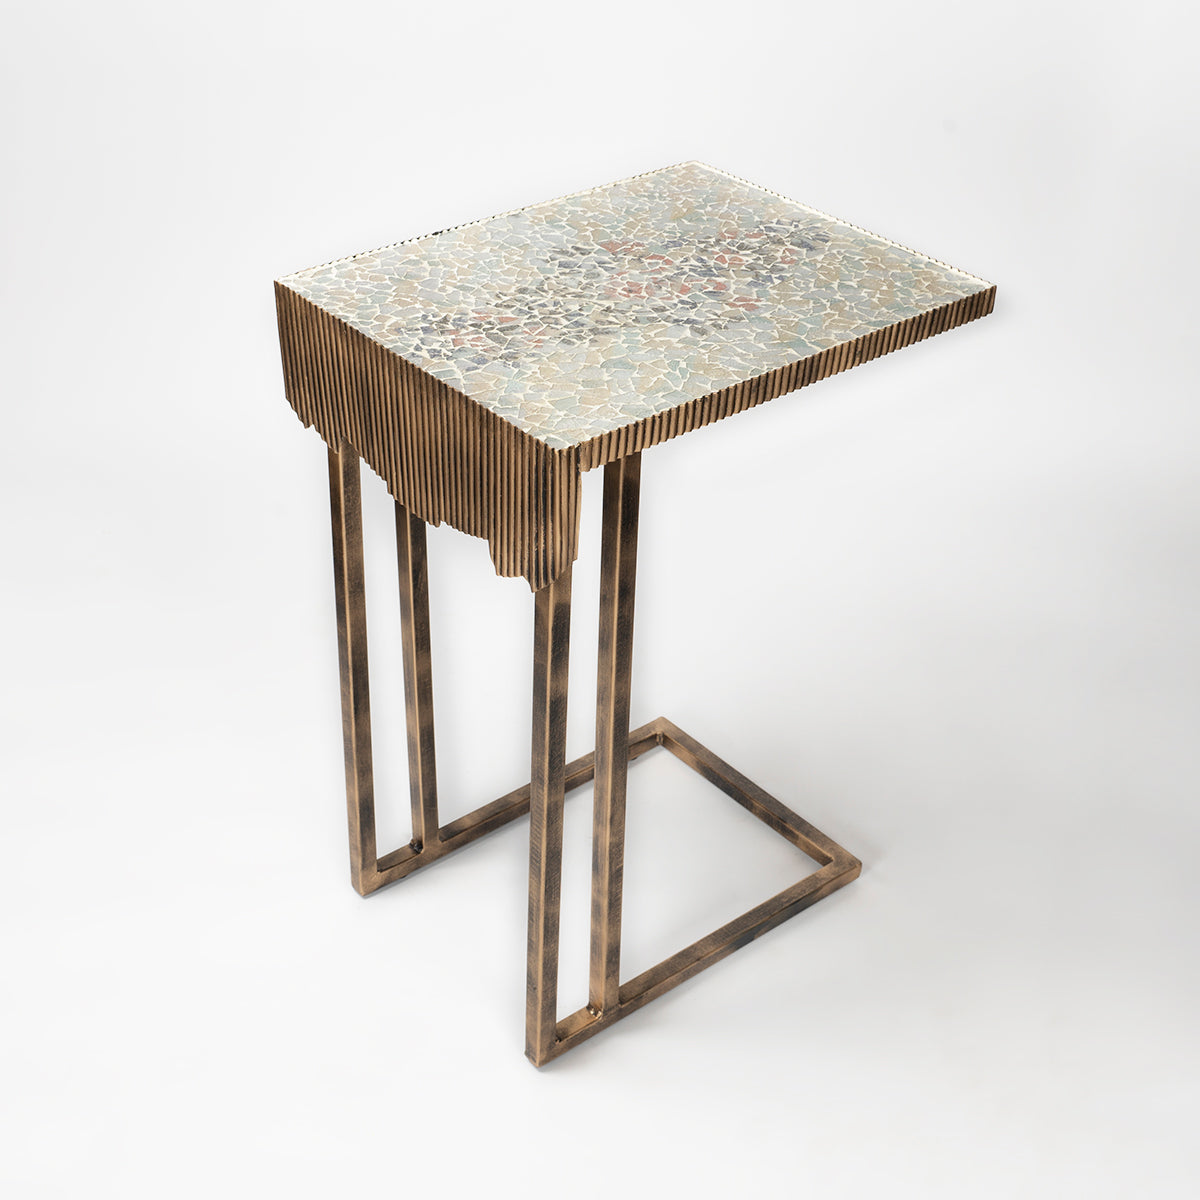 Mosaic Rustic C Table